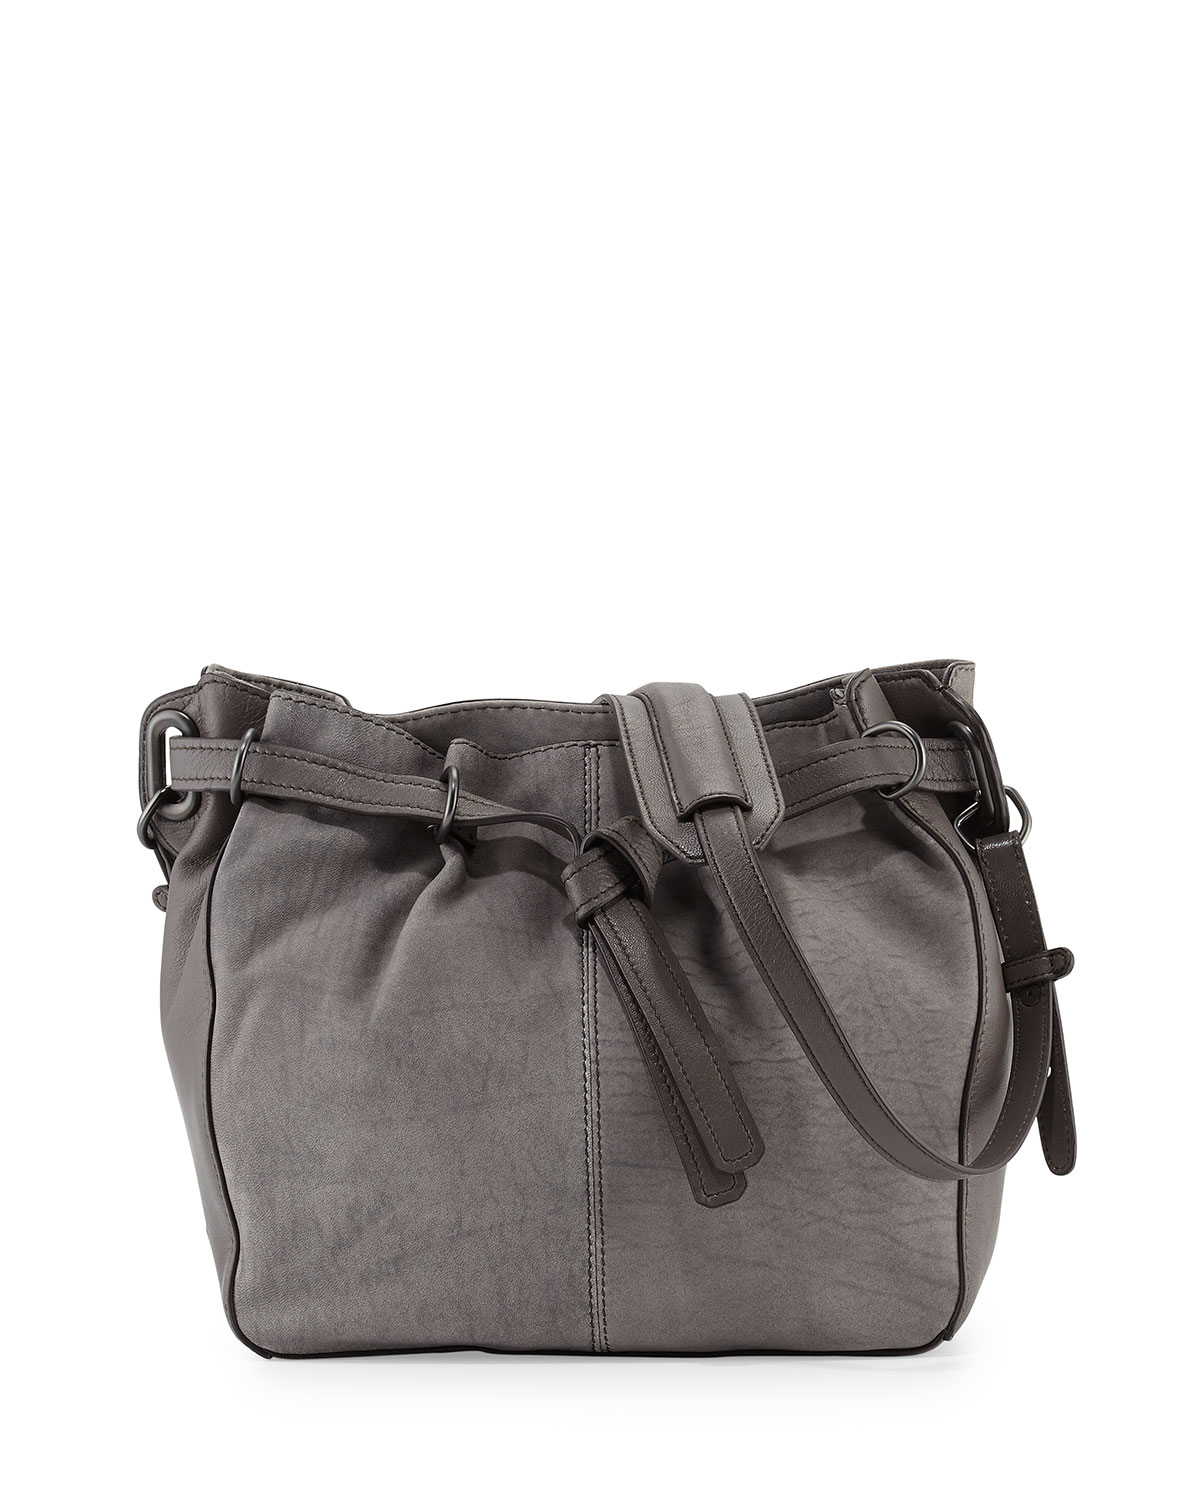 Kooba Bailey Two-Tone Leather Bucket Bag in Grey (Gray) - Lyst